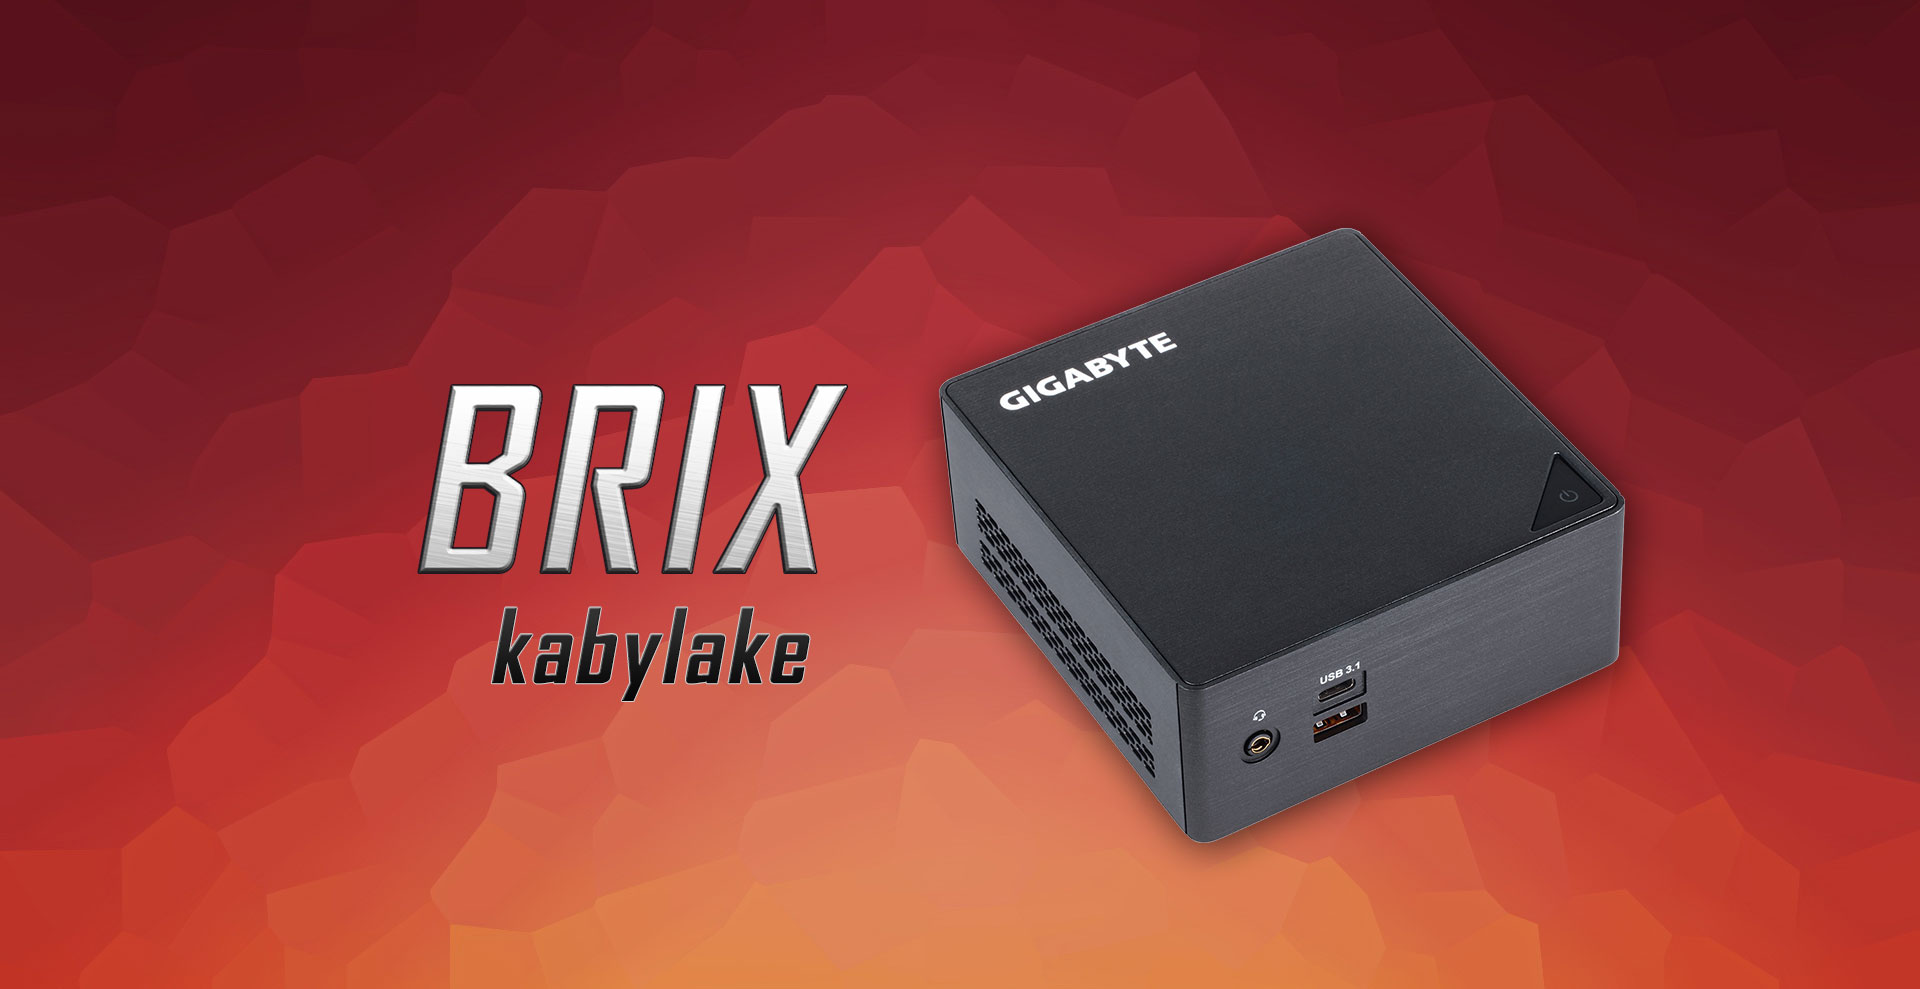 Brix Kabylake Mini PC